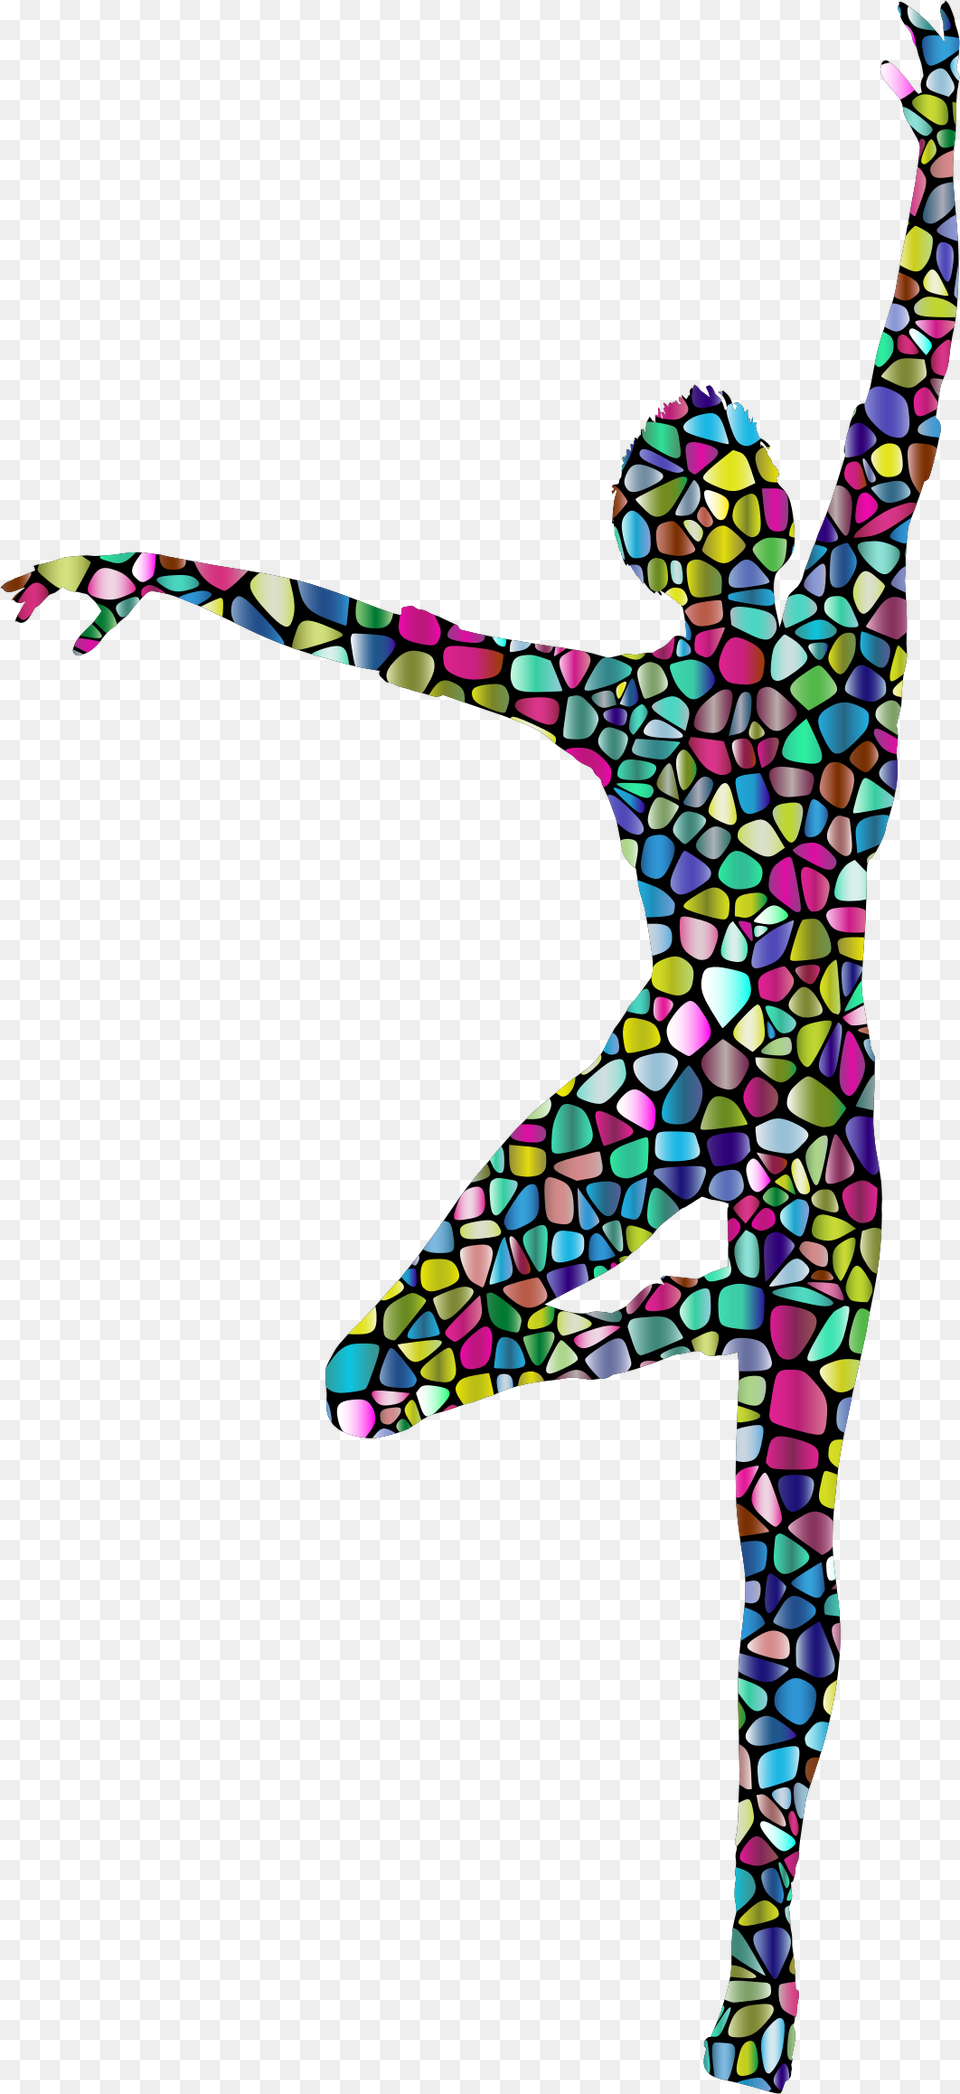 Polyprismatic Tiled Dancing Woman Silhouette Transparent Background Dance Clip Art, Person, Leisure Activities Png